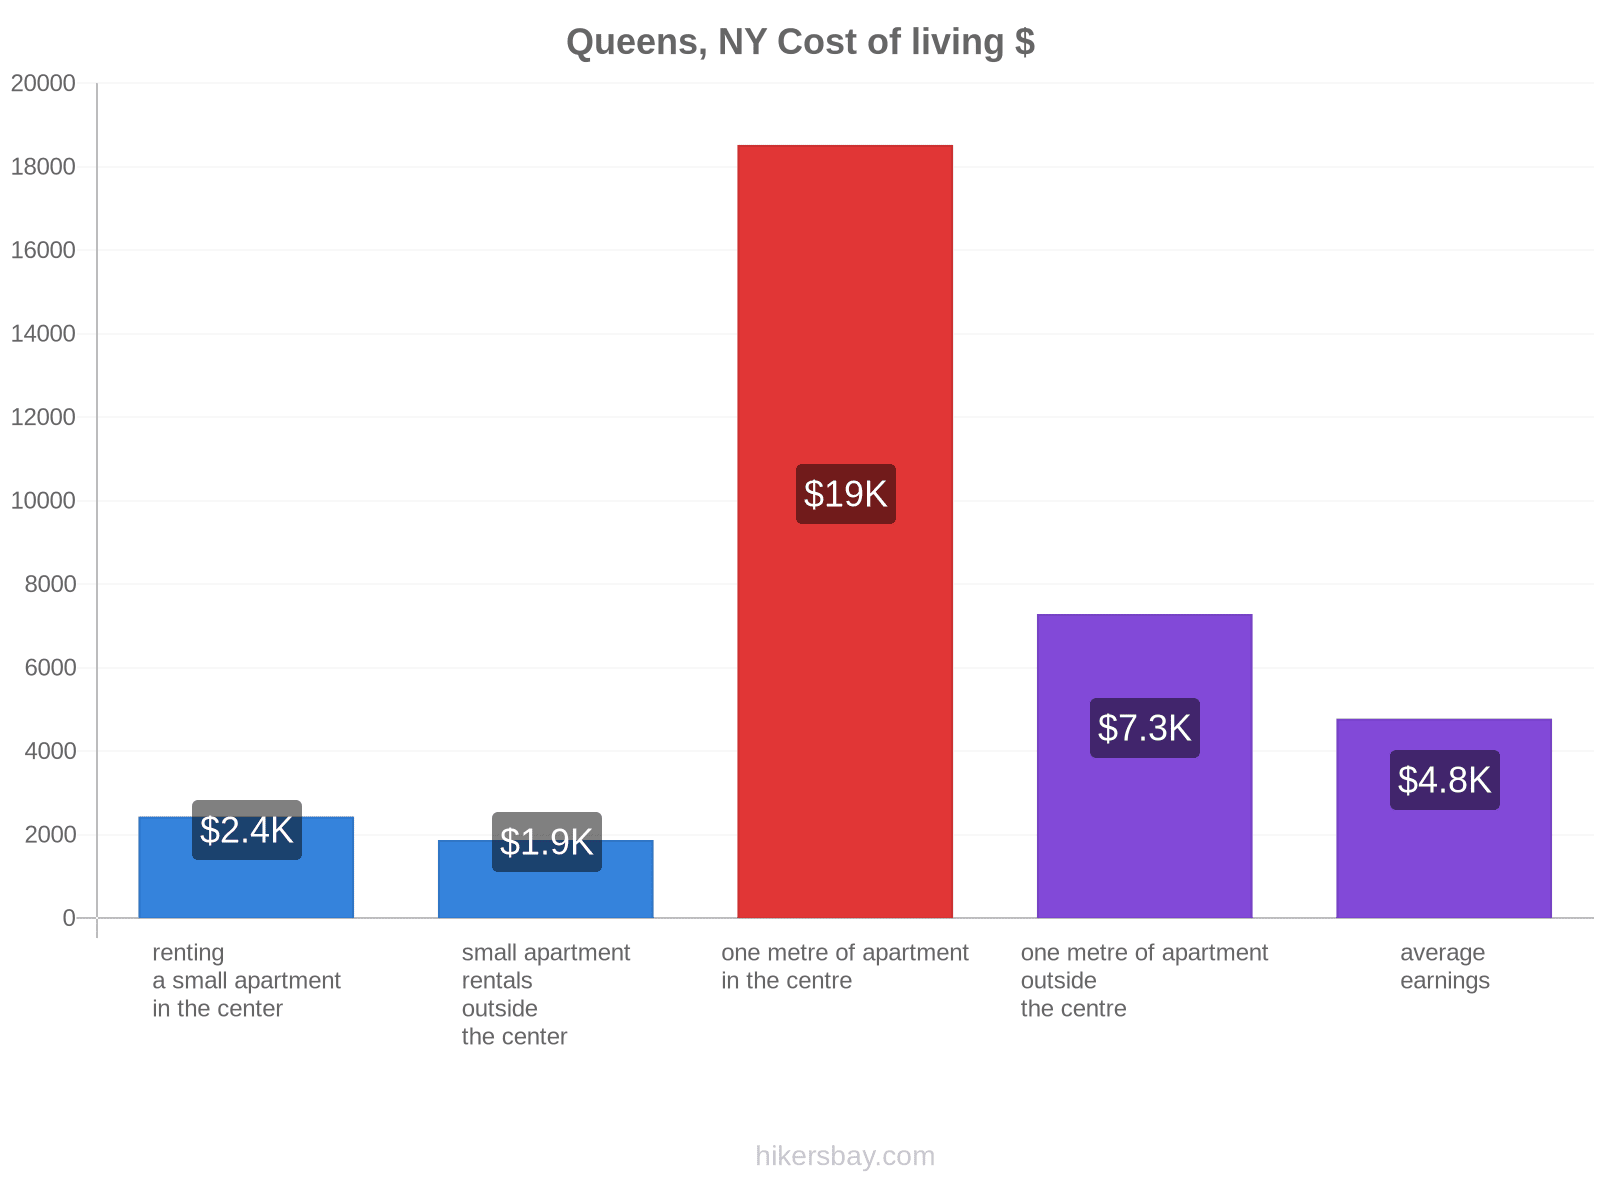 Queens, NY cost of living hikersbay.com